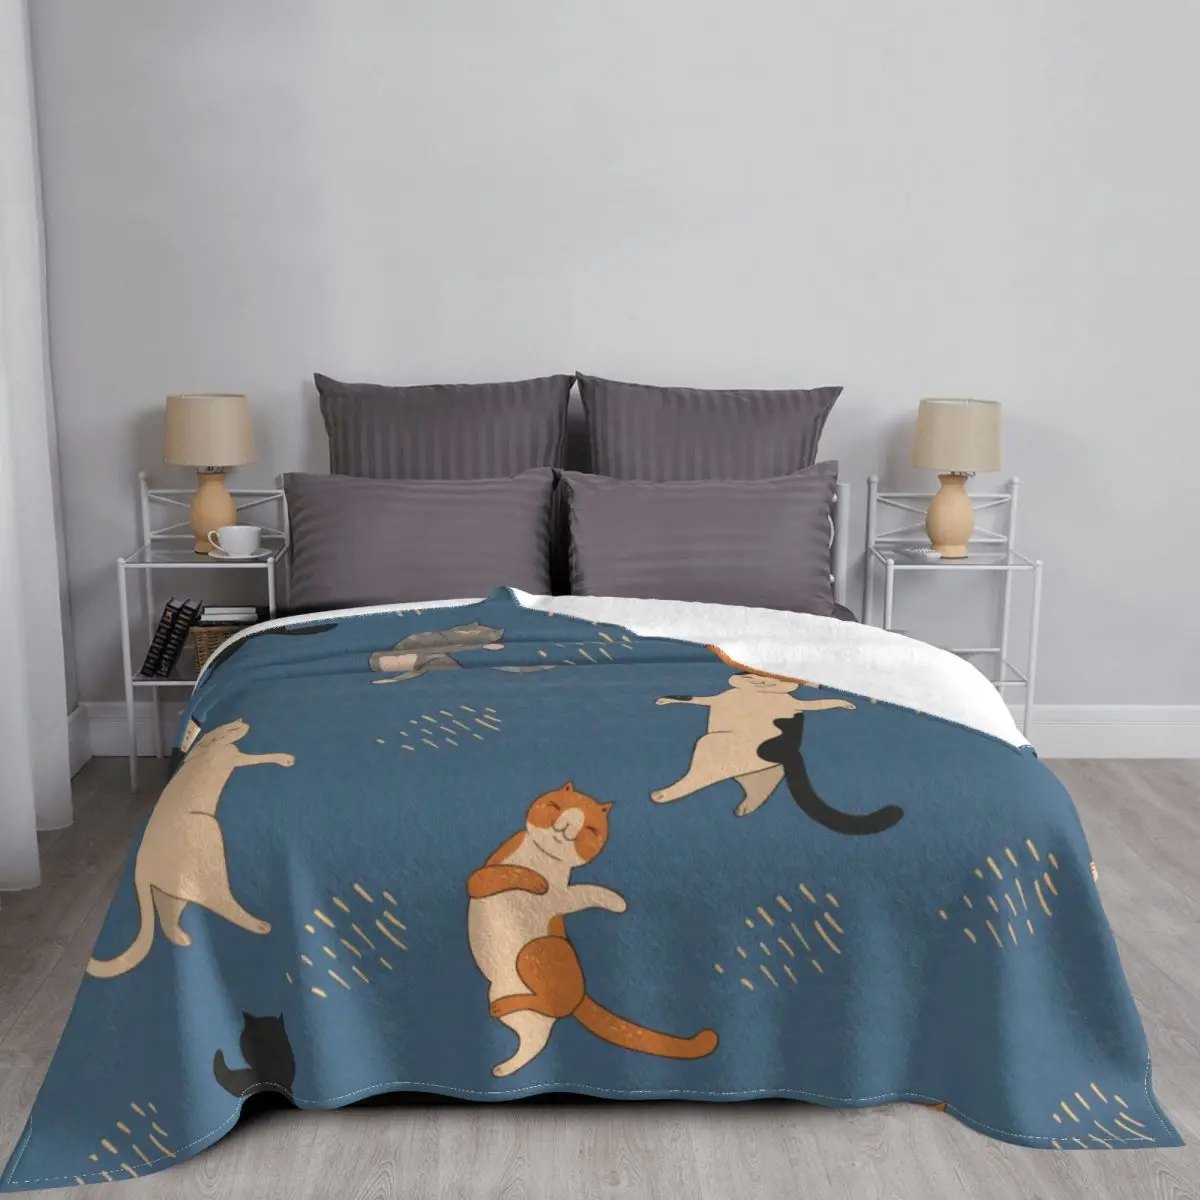 Одеяло в клетка с хубав модел котка, топло, уютно фланелевое флисовое одеало за трайно домашен интериор